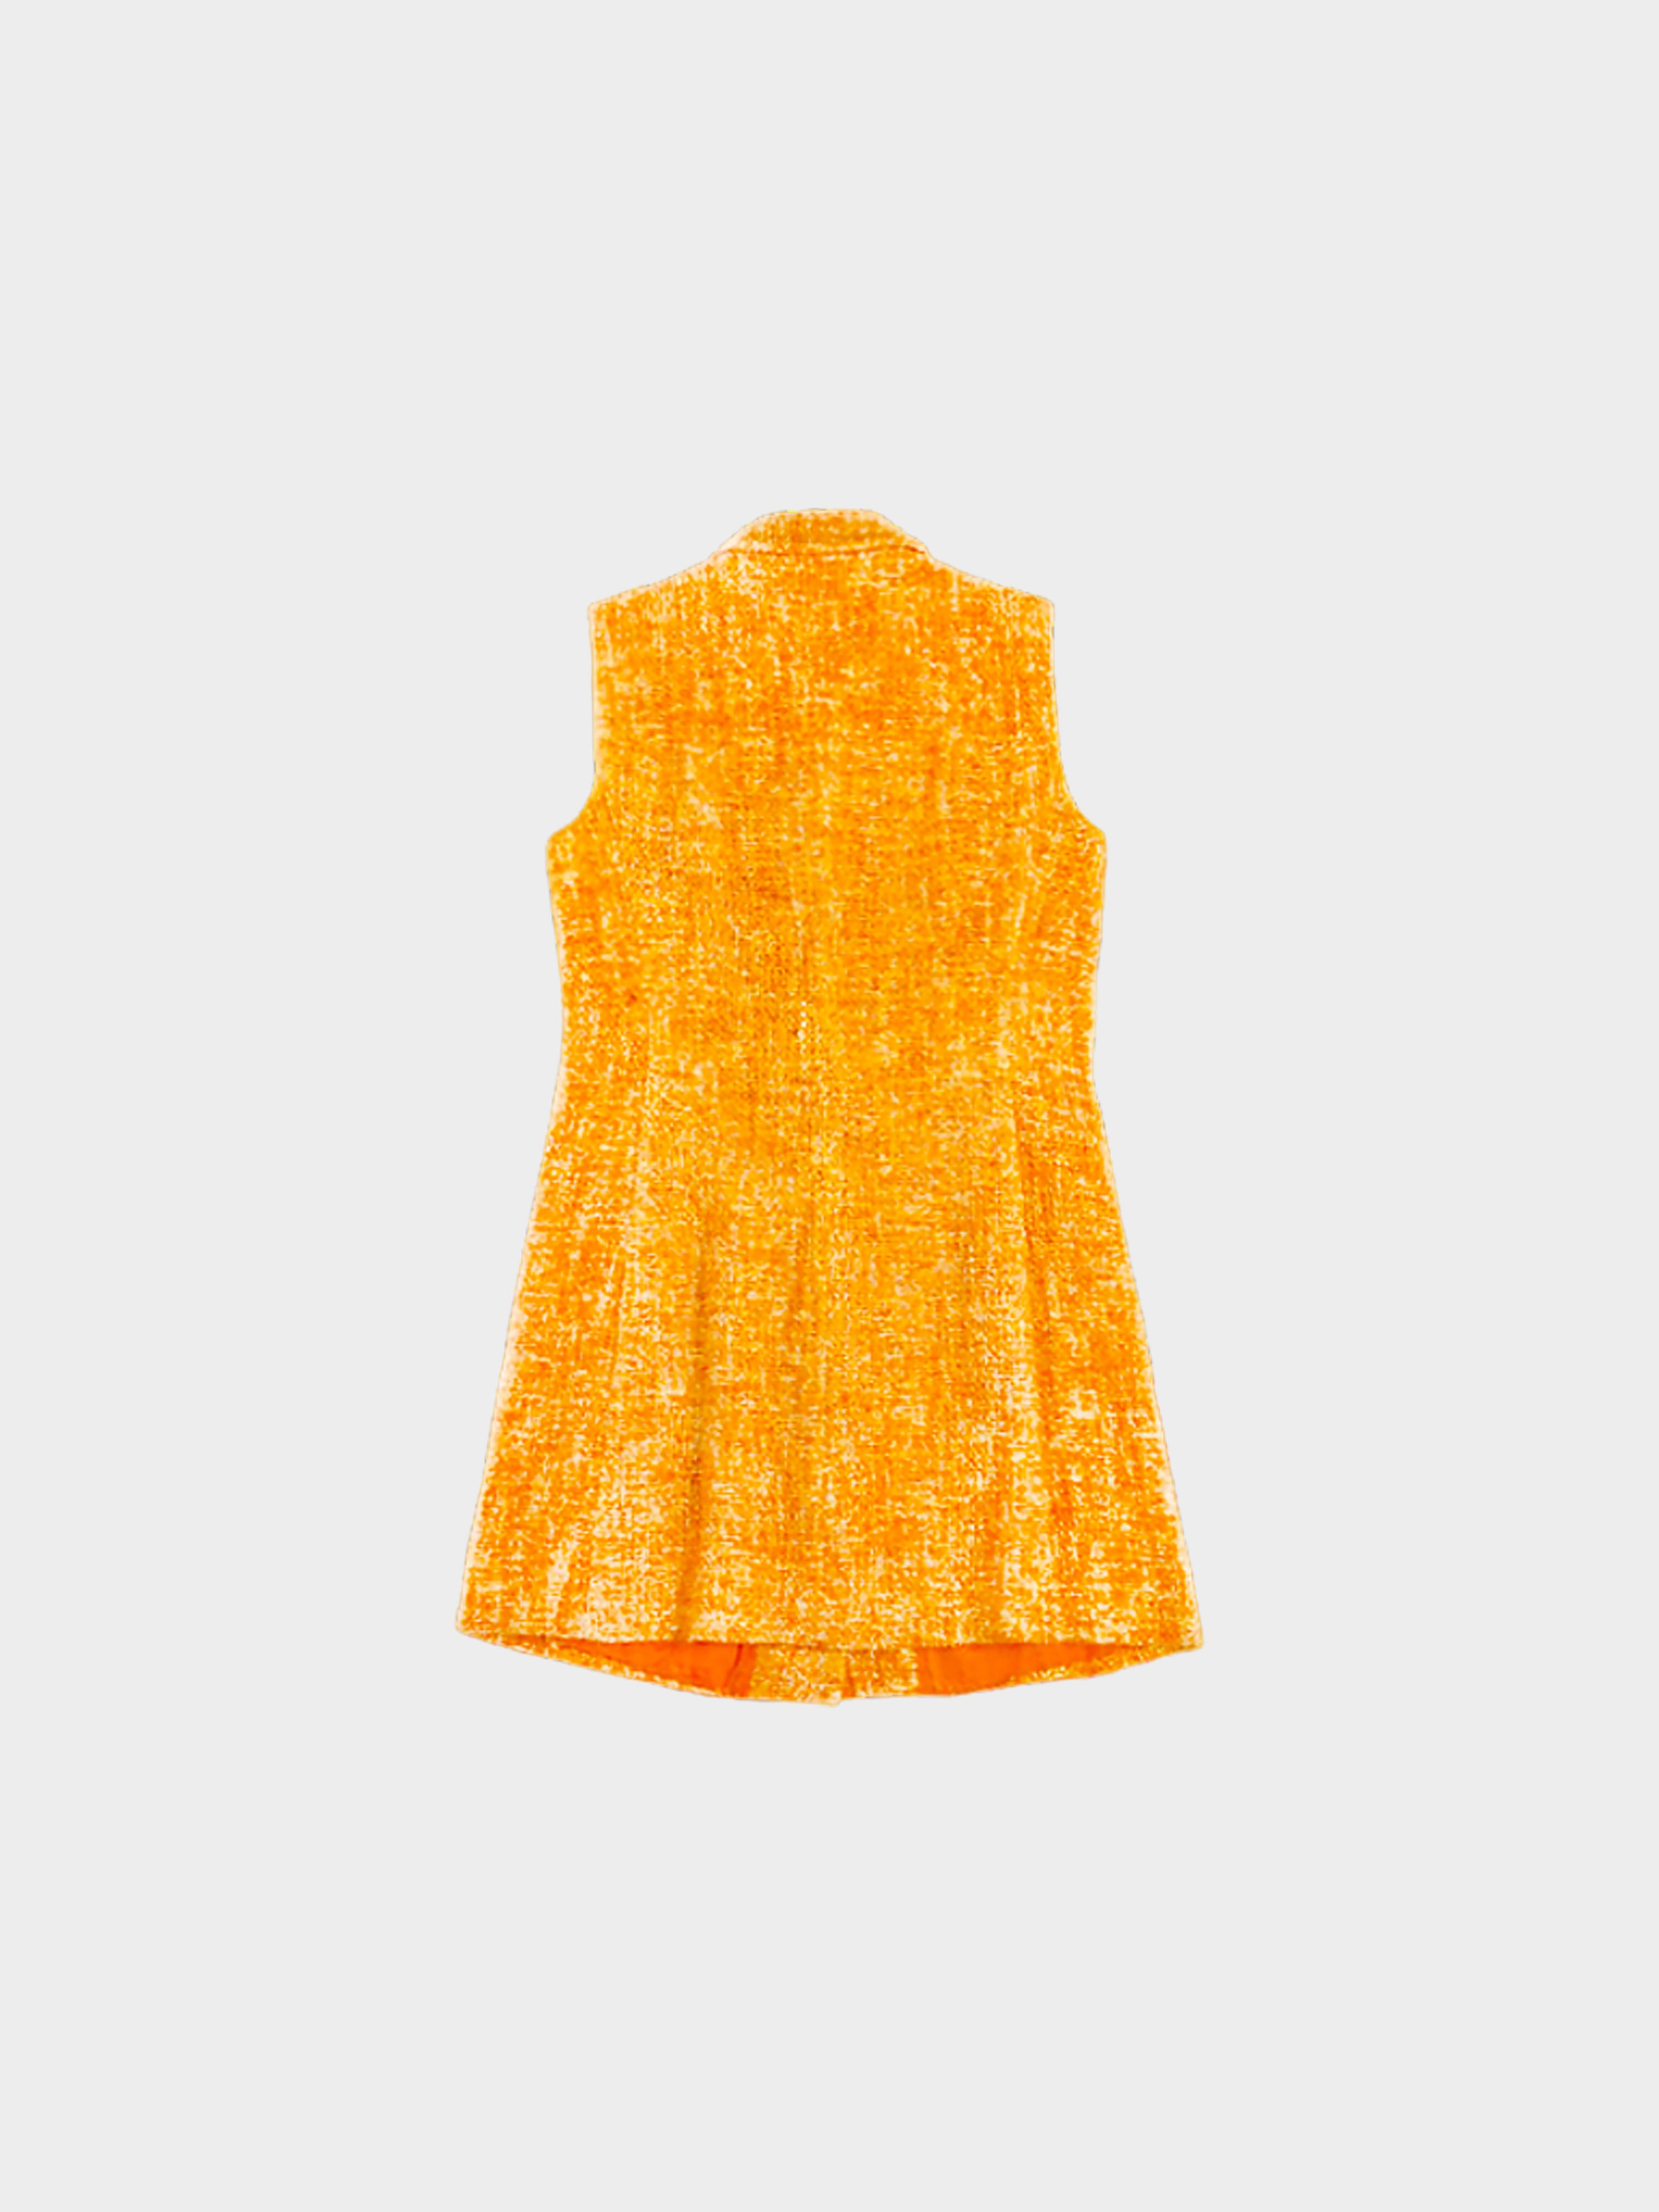 Miu Miu SS 1996 Orange Tweed Dress